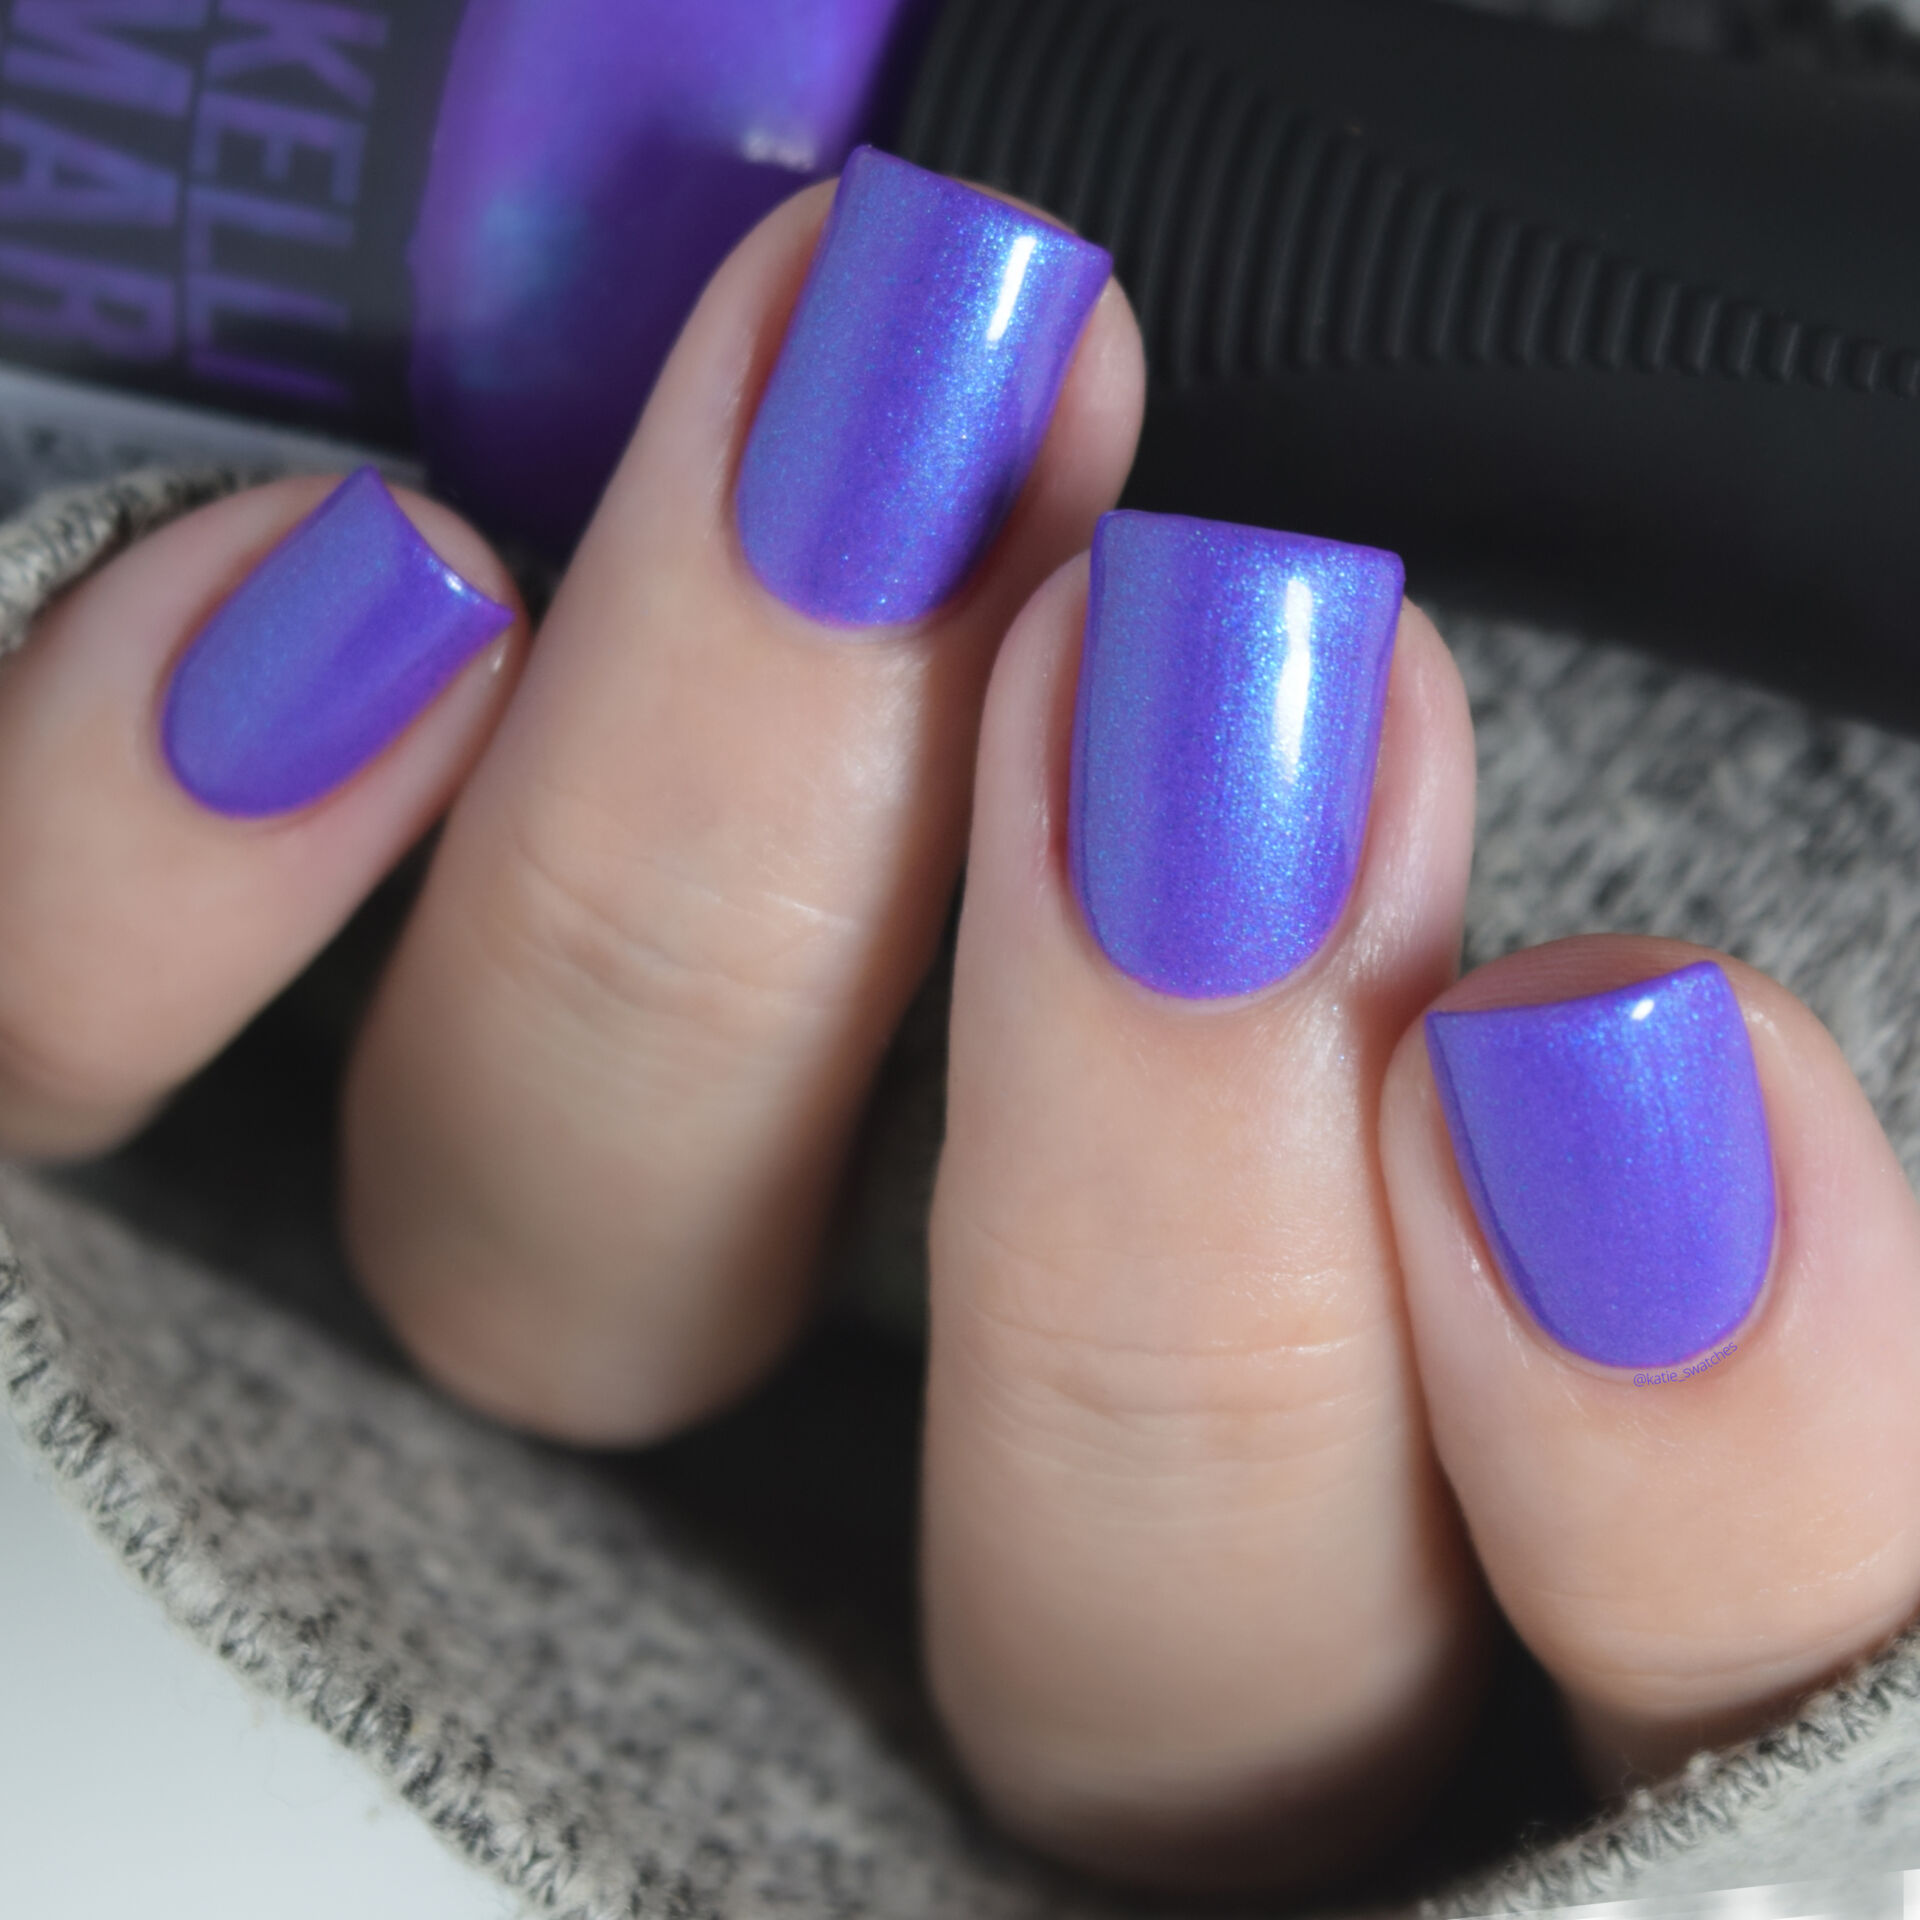 ORLY Kelli's Solar Flare nail polish swatch - part of the ORLY x Kelli Marissa Trio nail polish - purple nail polish with blue shimmer